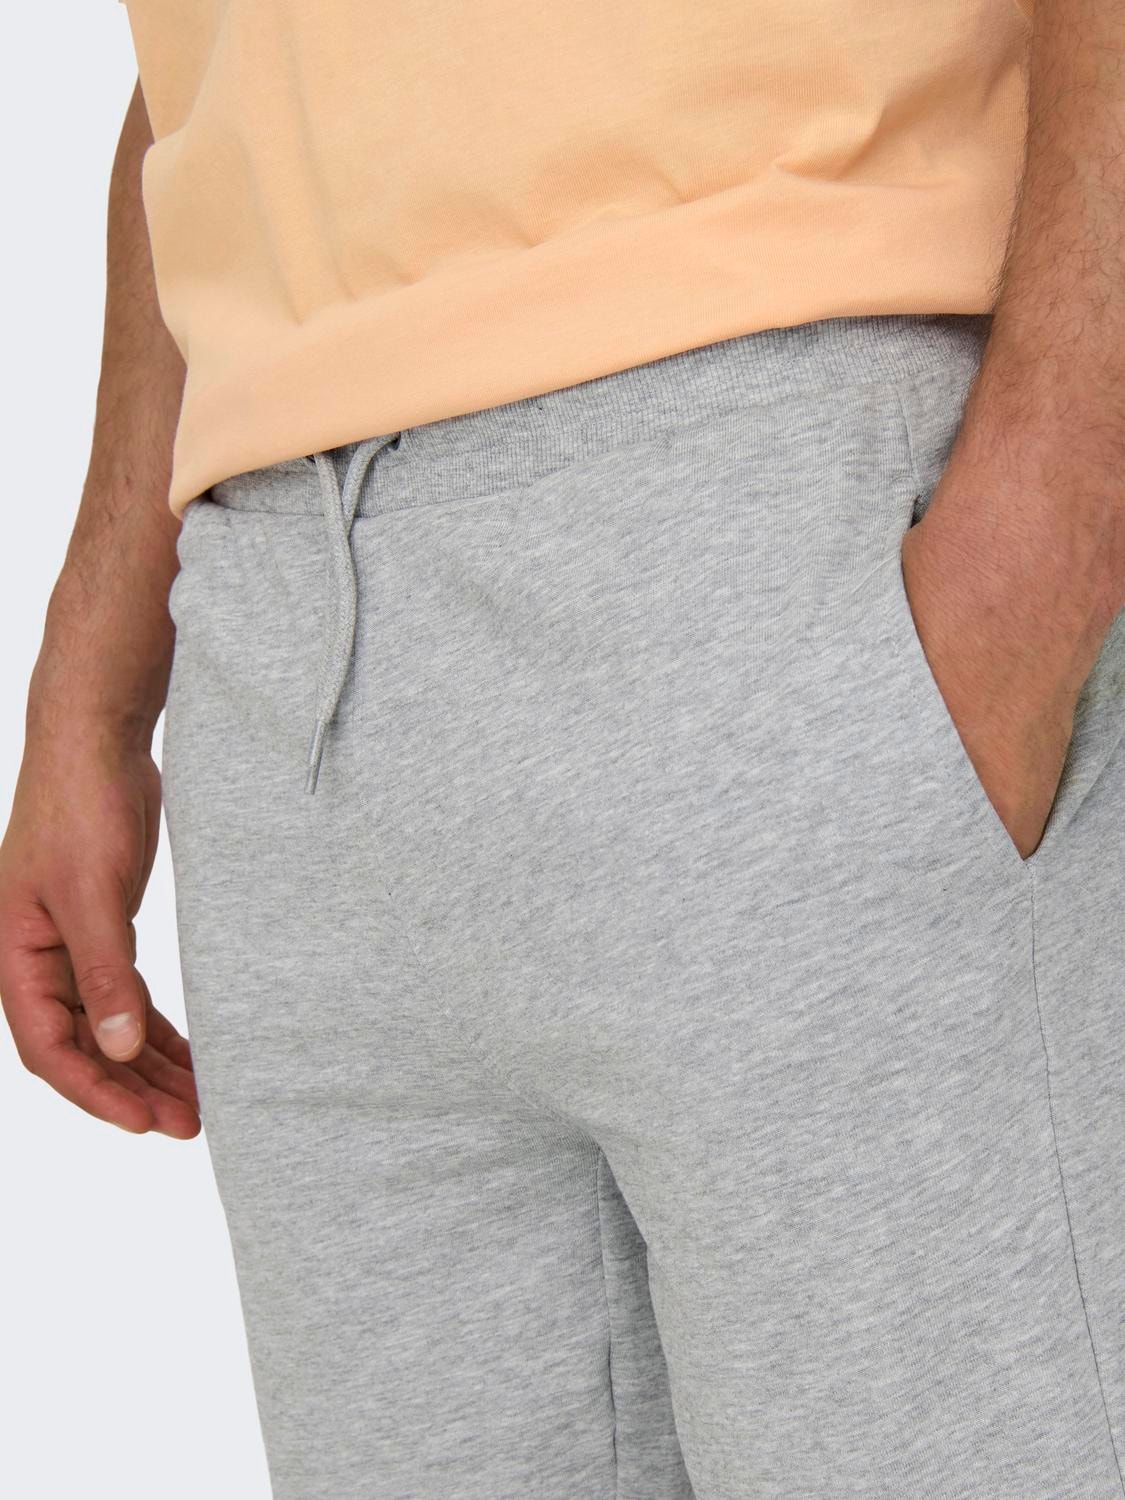 ONLY & SONS Normal geschnitten Mittlere Taille Shorts -Light Grey Melange - 22015623